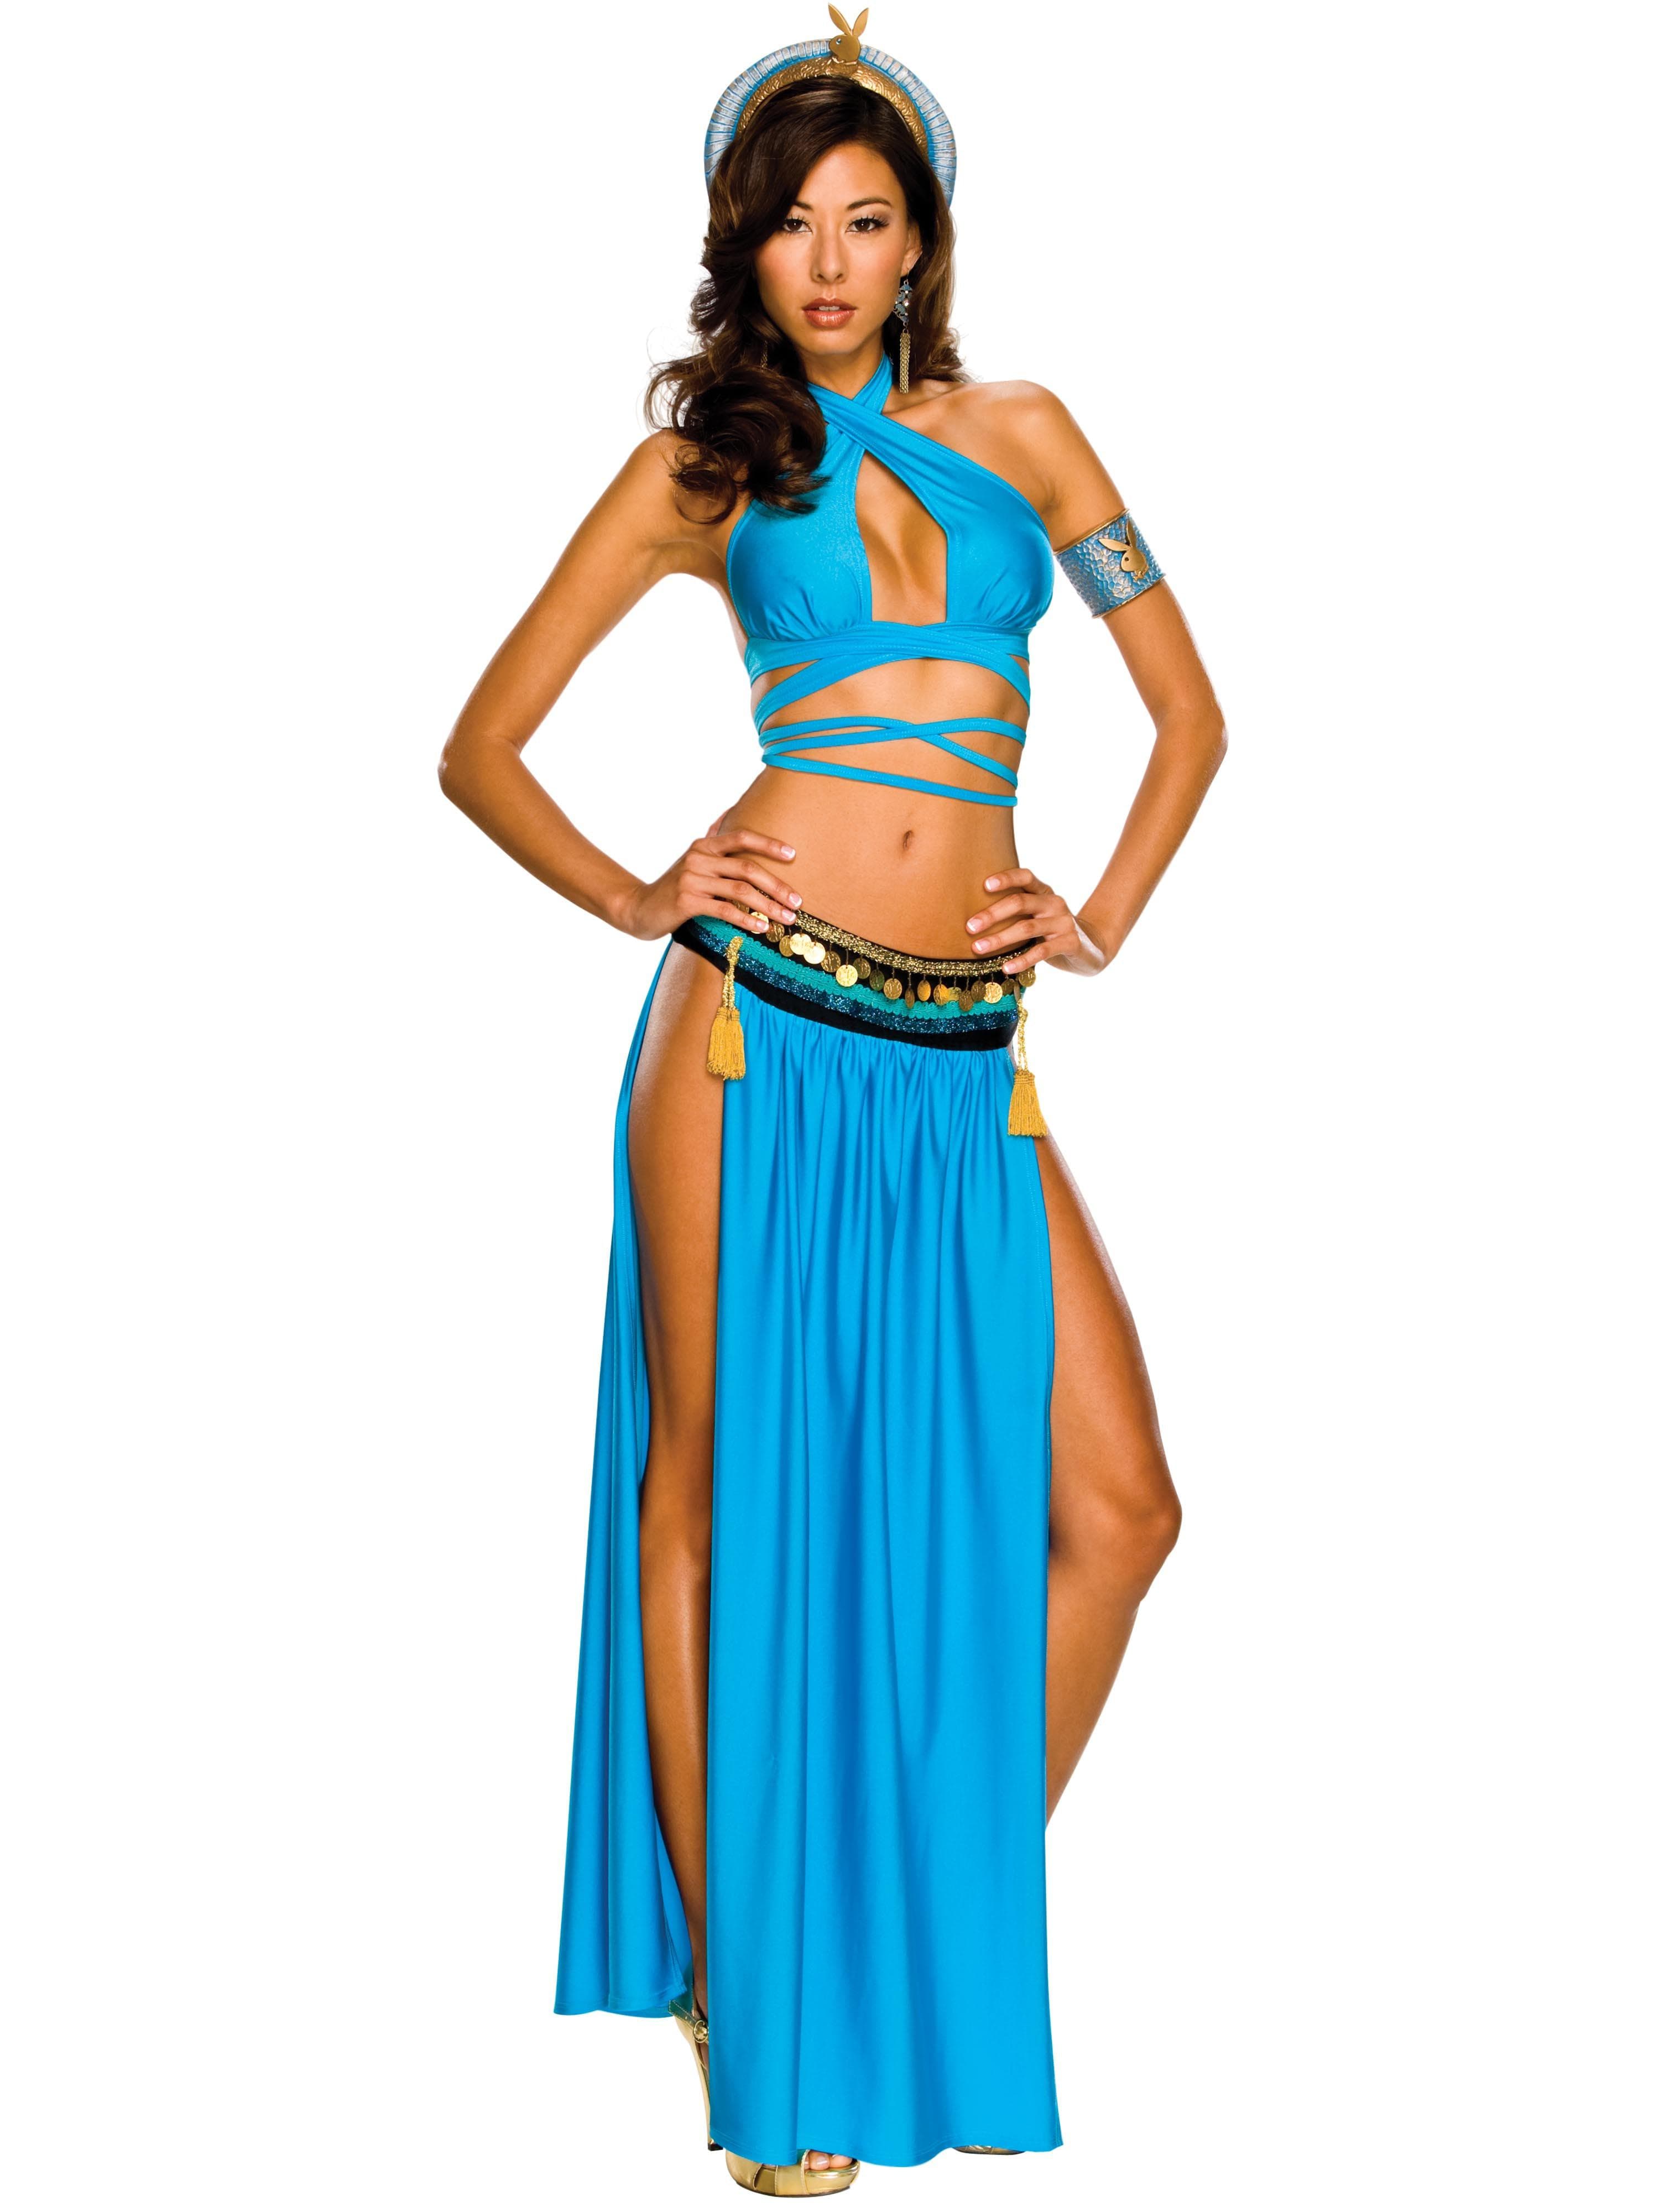 Women's Playboy Sexy Cleopatra Costume - costumes.com